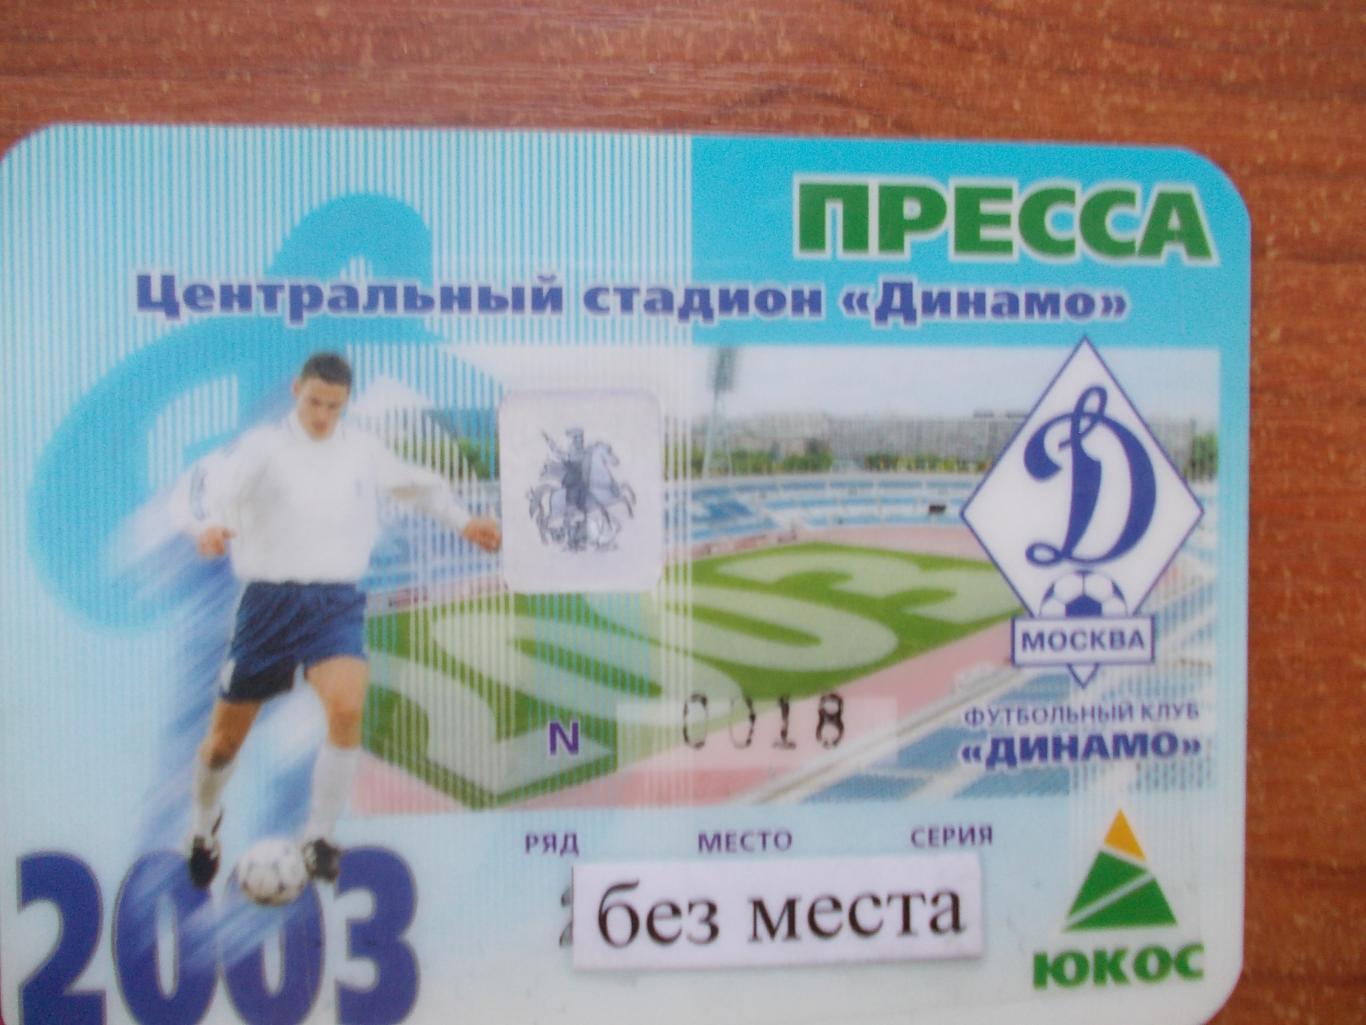 Аккредитация на сезон 2003 года московского стадиона Динамо